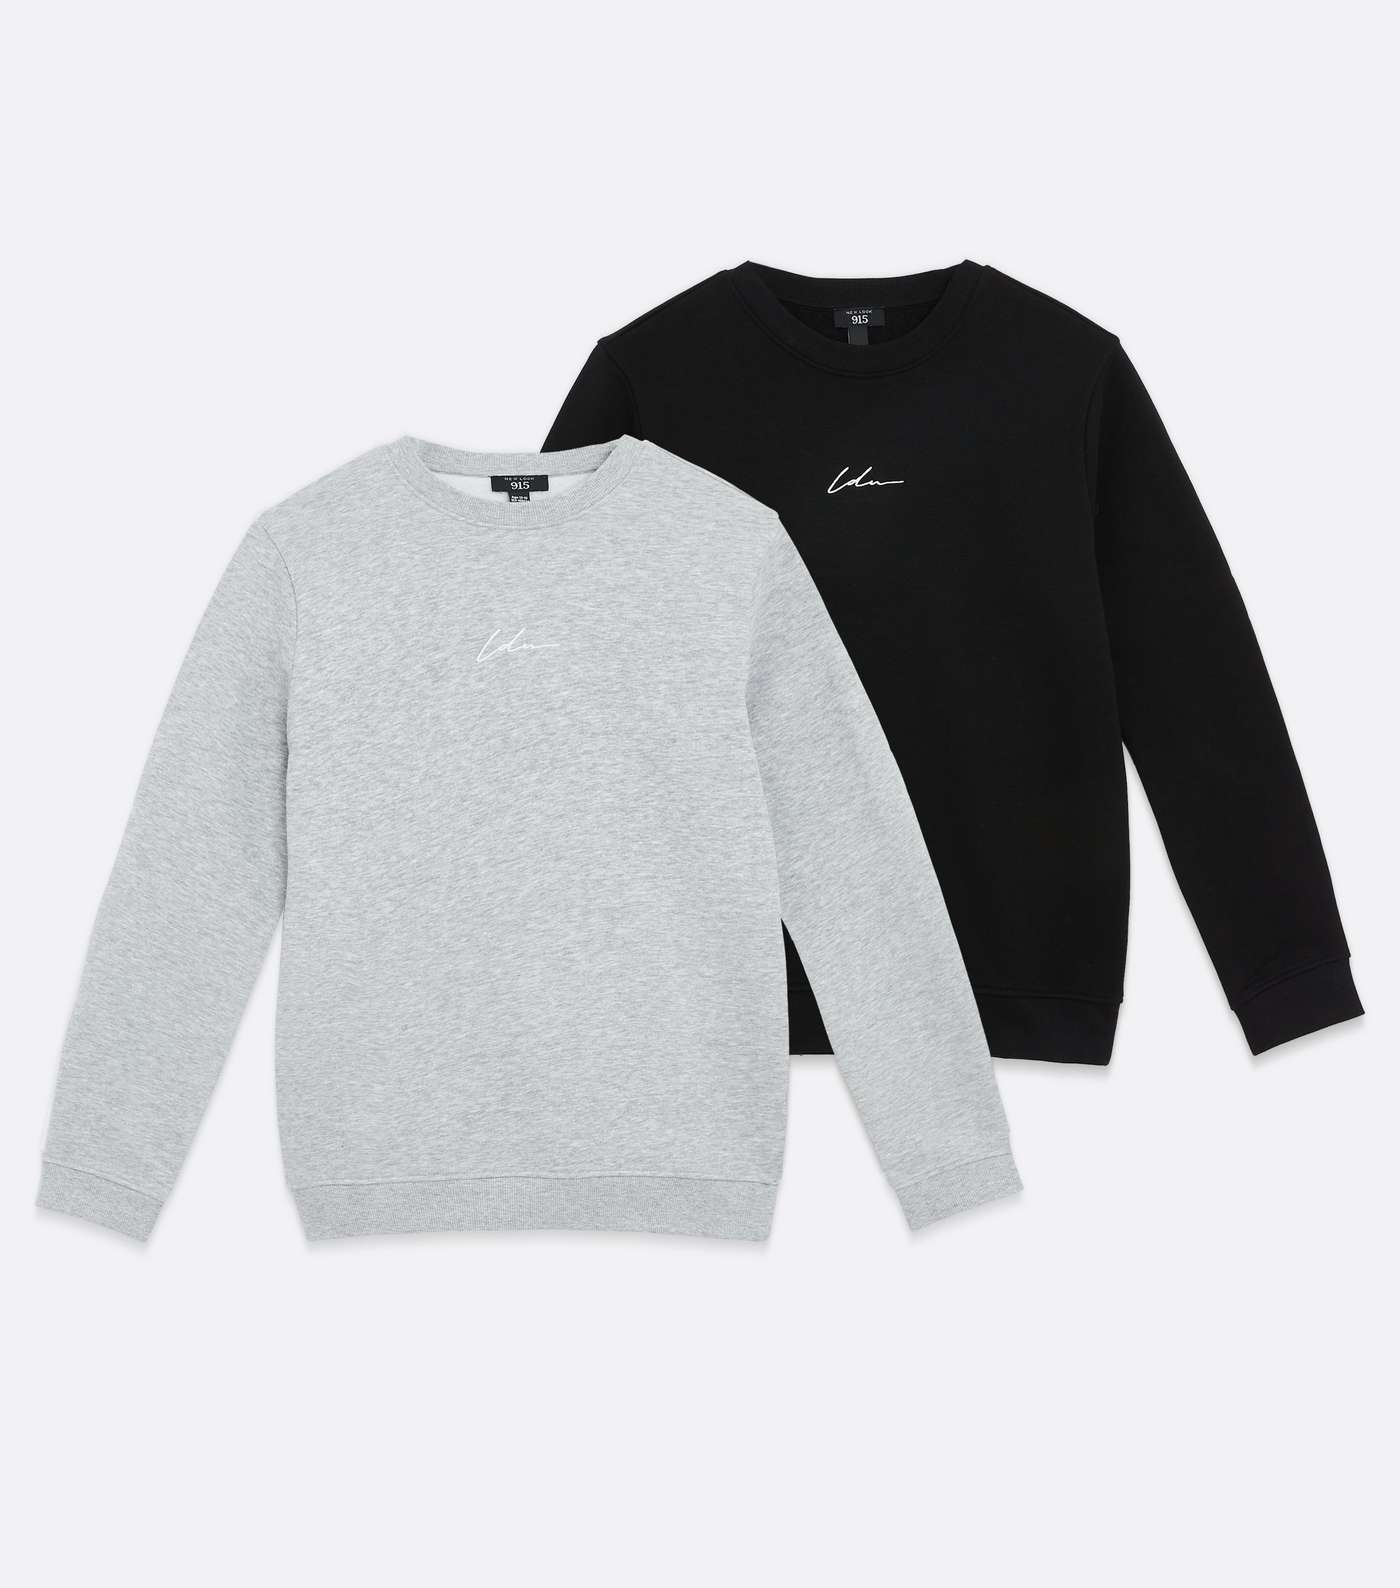 Boys 2 Pack Grey and Black Jersey Sweatshirts Image 5